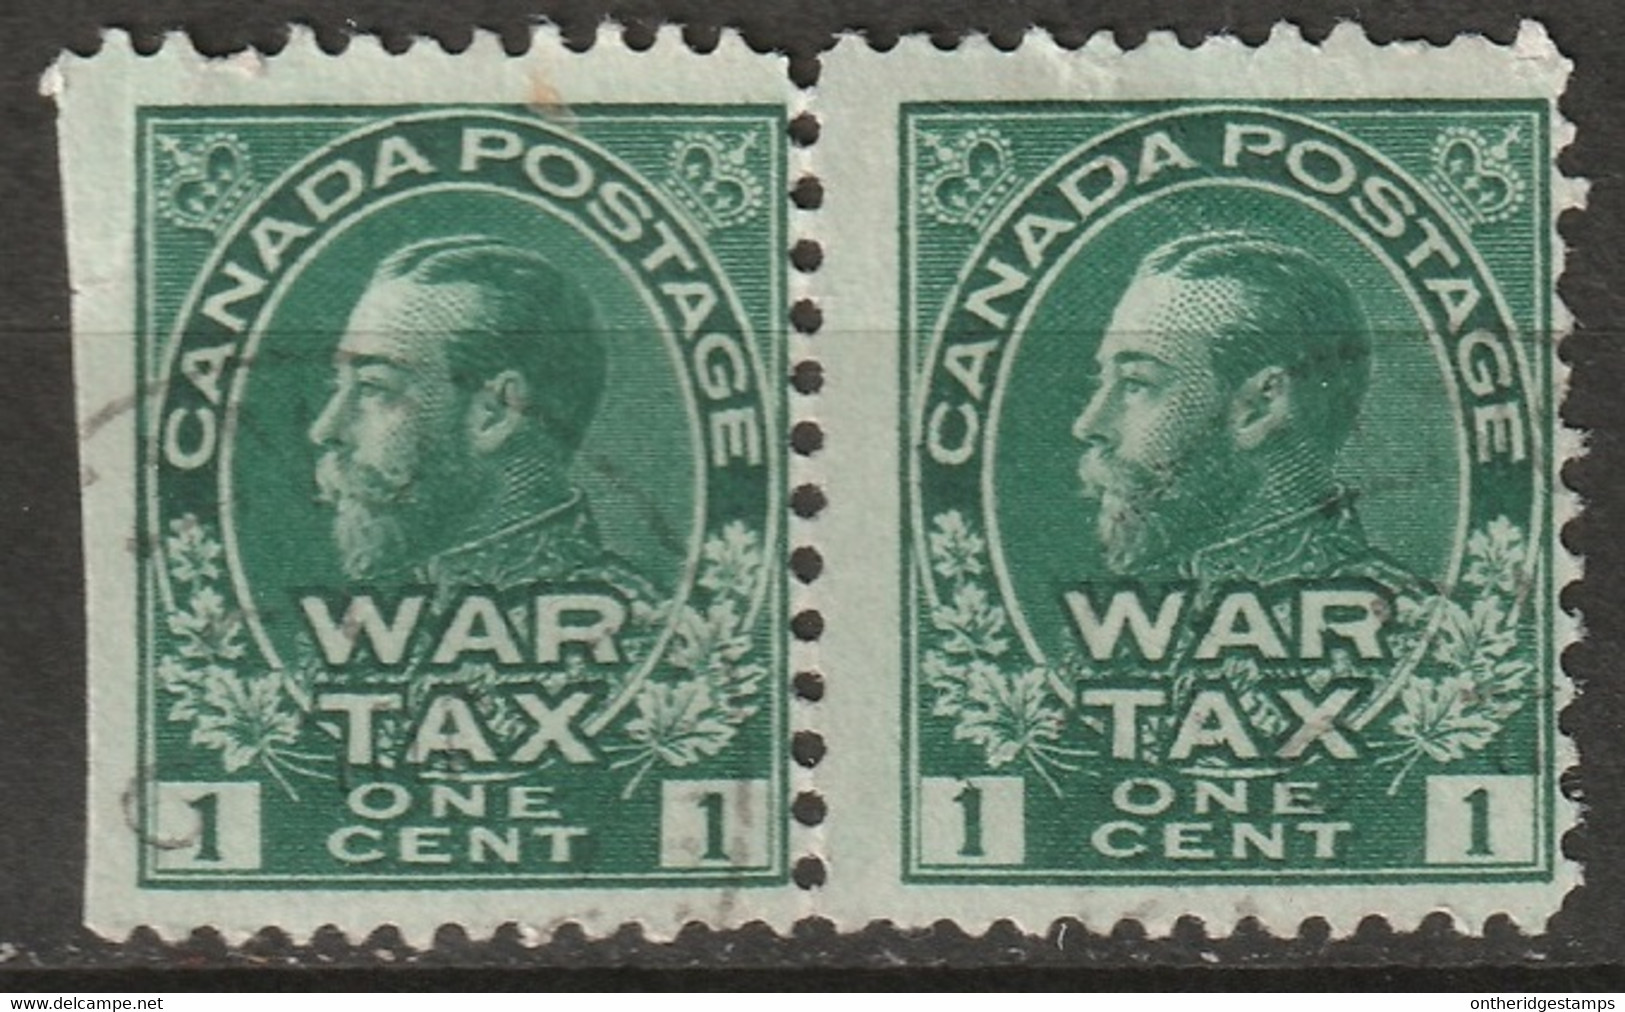 Canada 1915 Sc MR1  War Tax Pair Used - Kriegssteuermarken